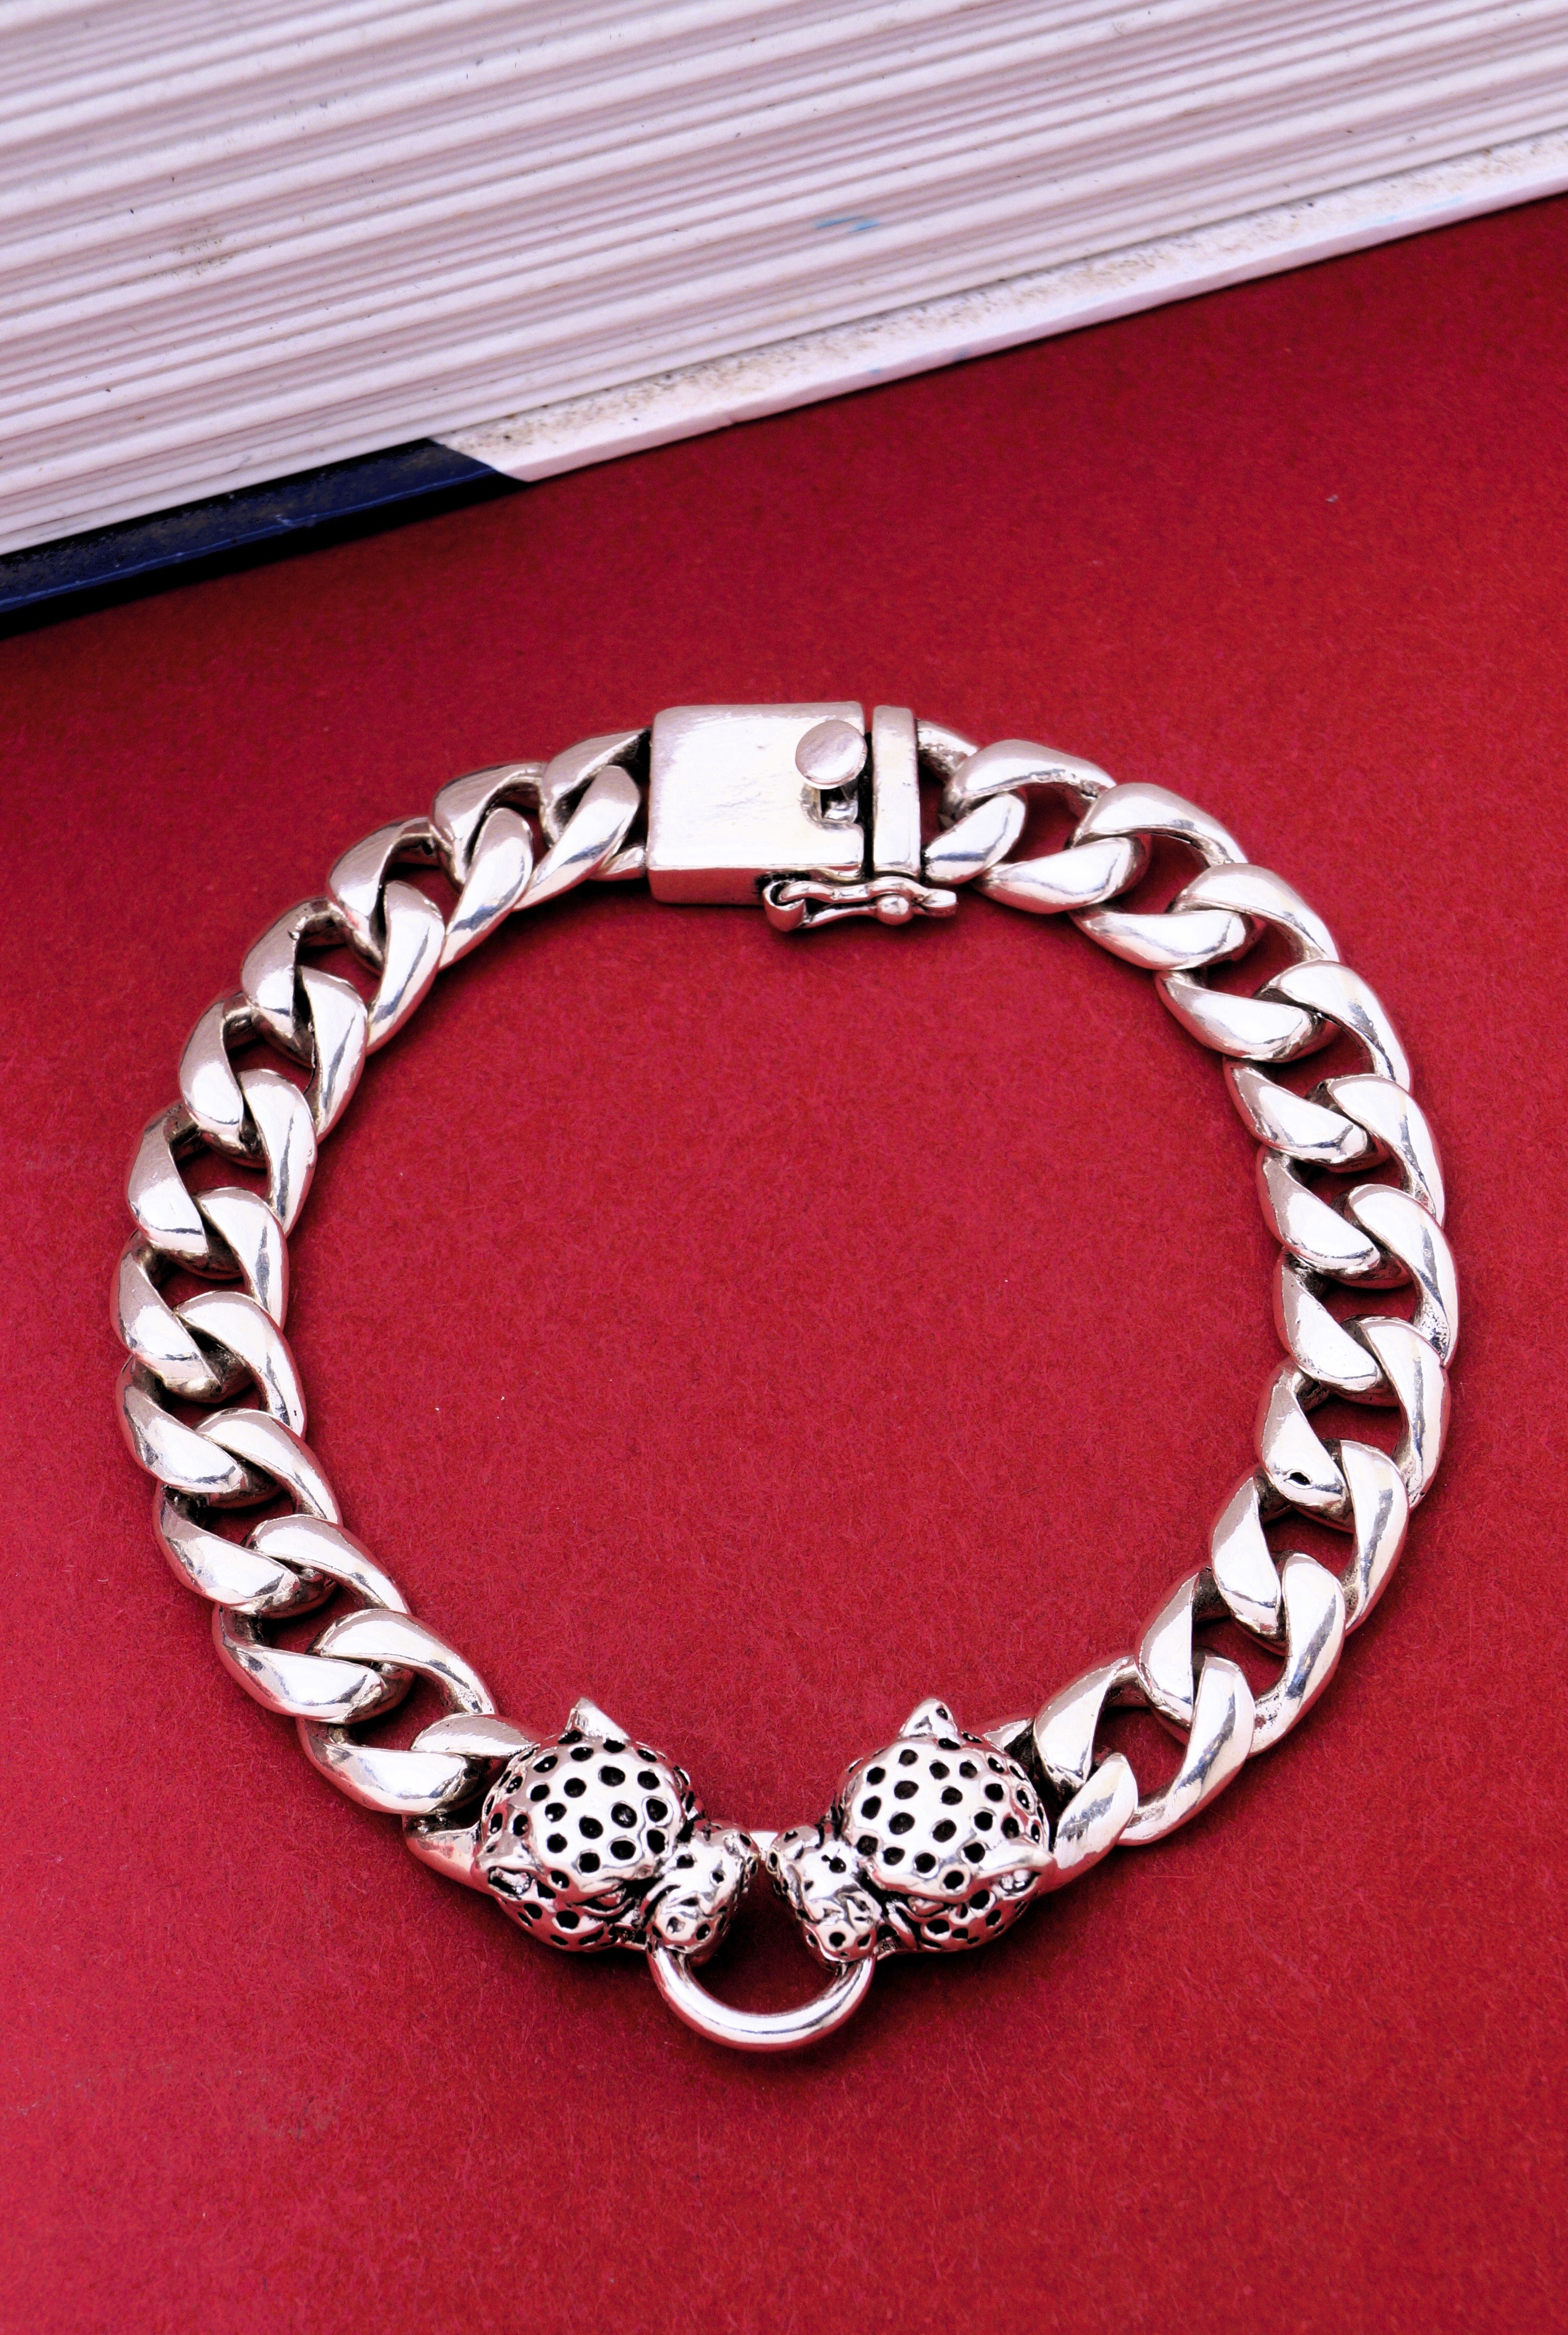 Silver Bracelet Men, Mens Bracelet Chain Rope Link Mens Jewelry, Thin Silver  Bracelet, Silver Bracelet Chains for Man by Twistedpendant - Etsy